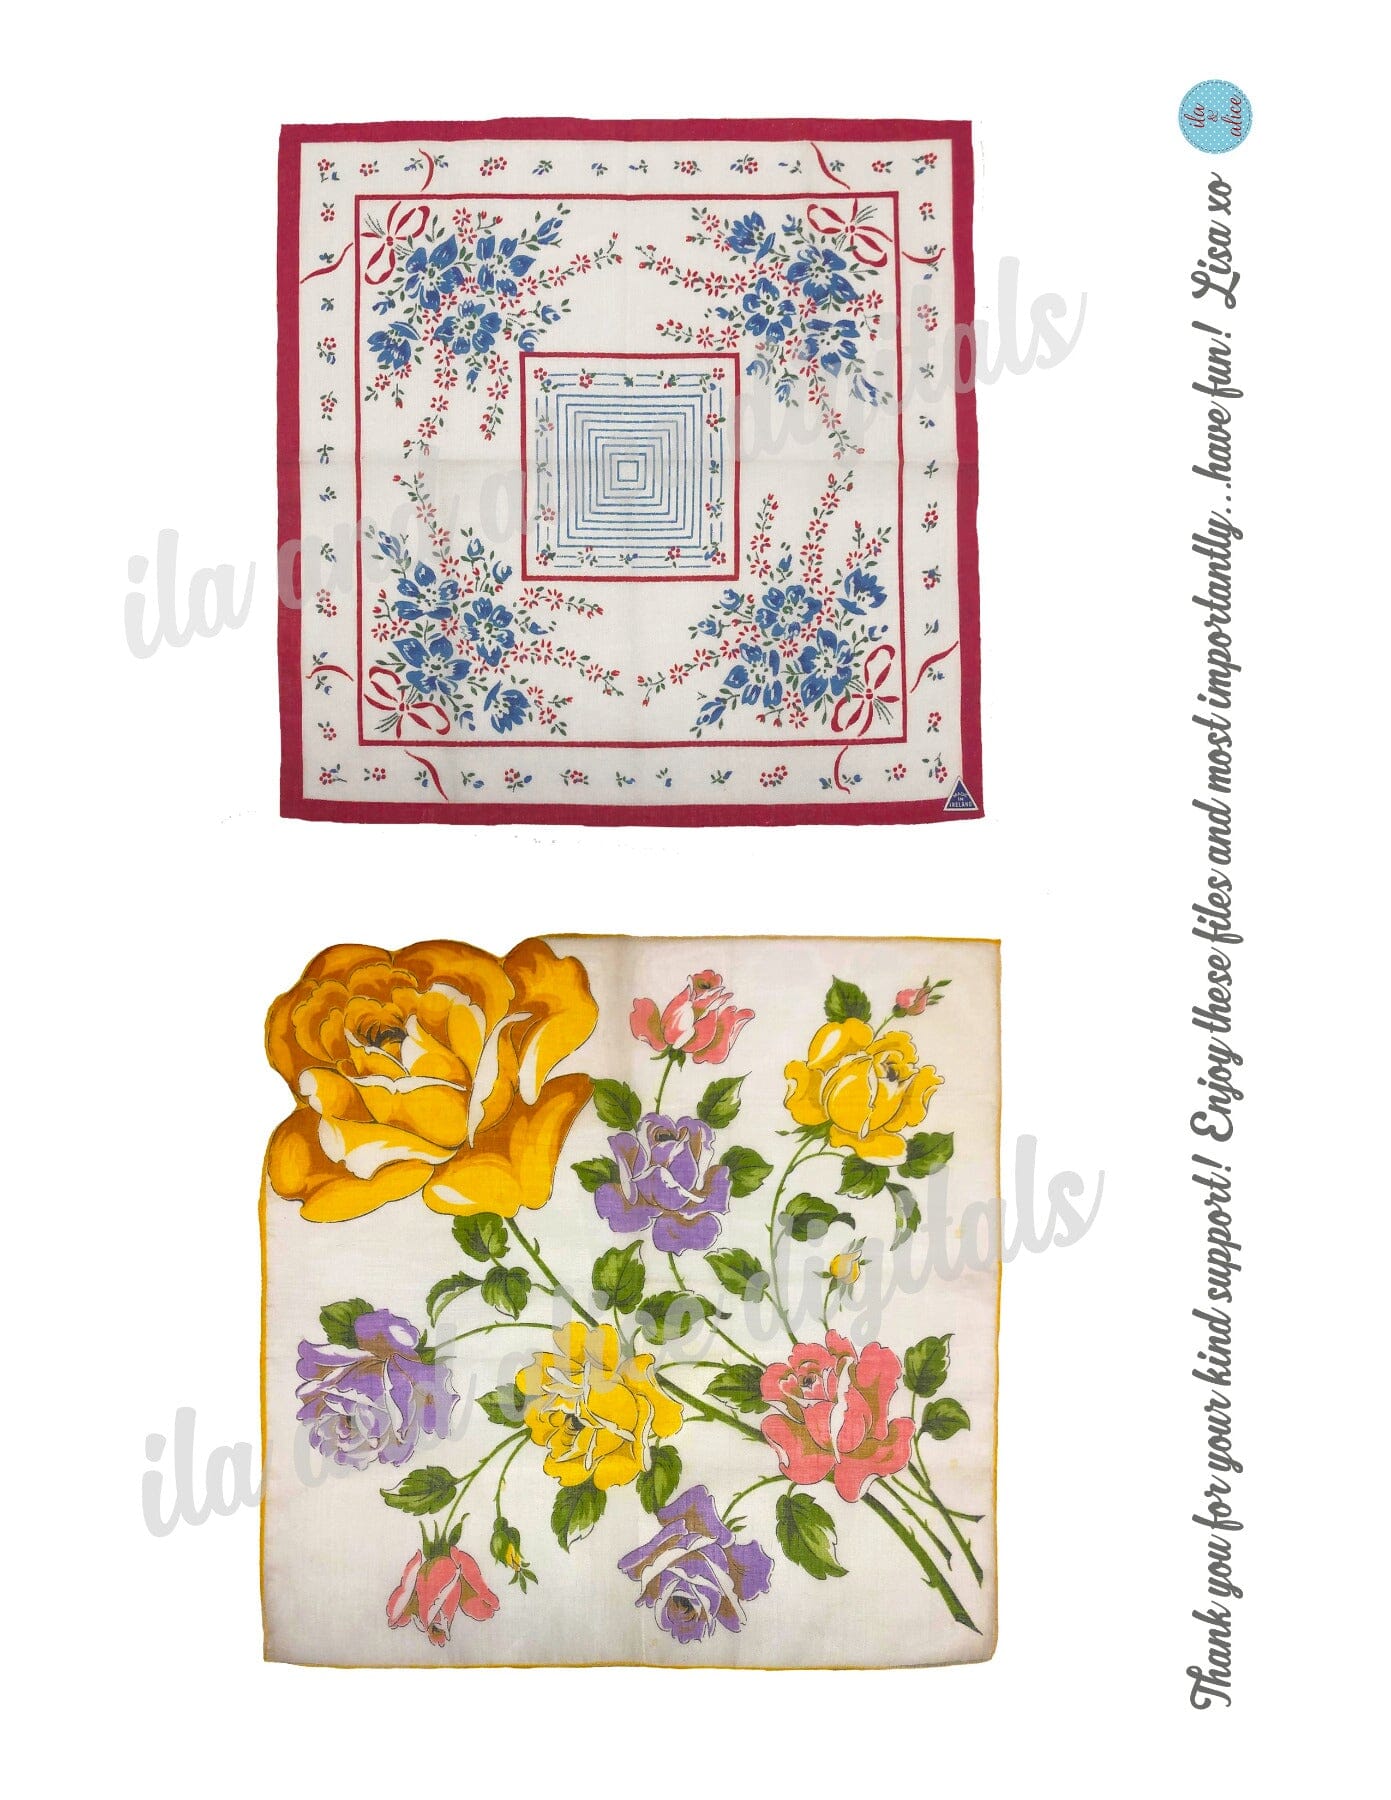 Pretty Floral Digital Hankies-Set of 6 Printable Vintage Hankies Journal ila & alice 